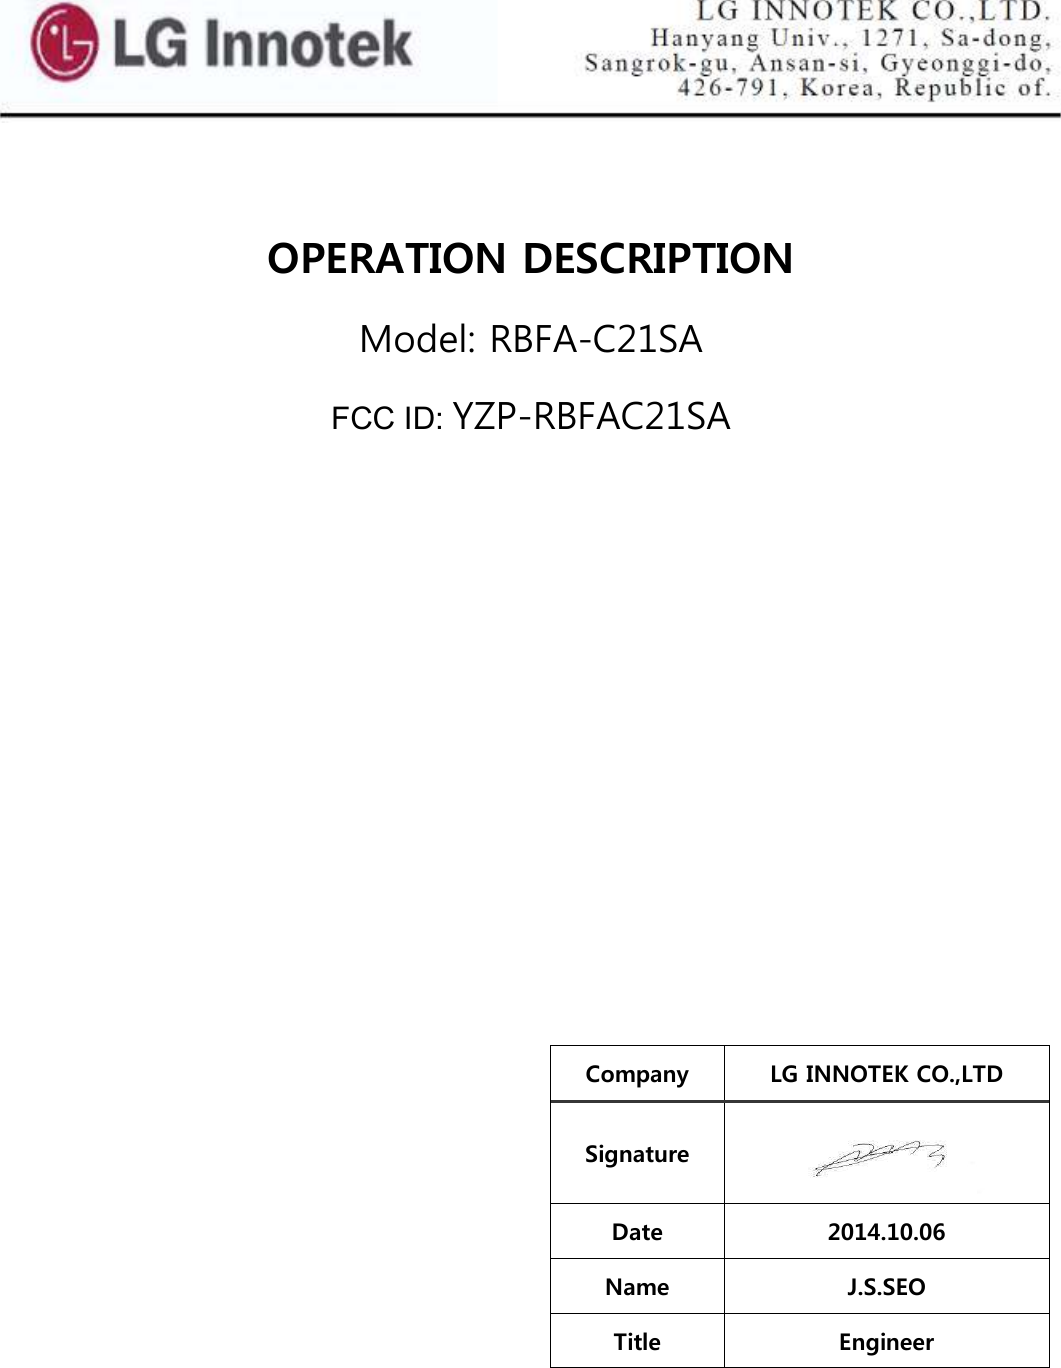   OPERATION DESCRIPTION Model: RBFA-C21SA FCC ID: YZP-RBFAC21SA            Company  LG INNOTEK CO.,LTD Signature  Date  2014.10.06 Name  J.S.SEO Title  Engineer    